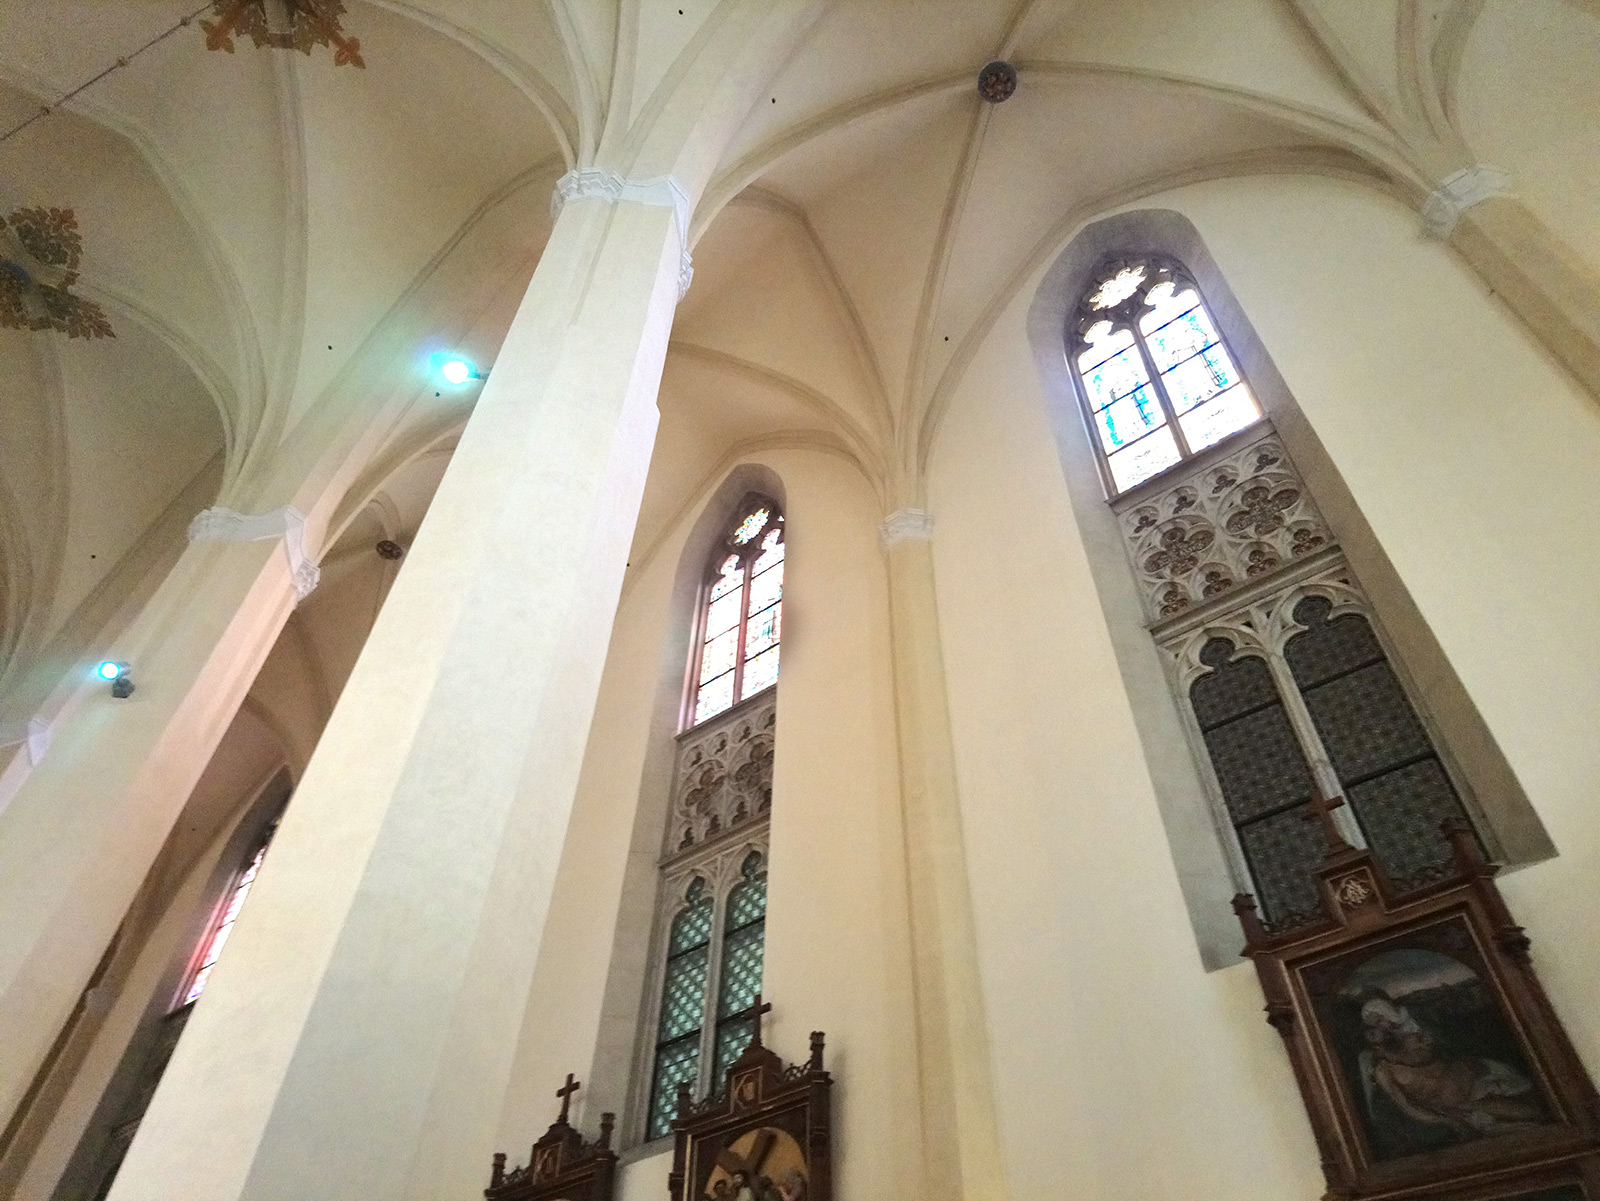 vyssi-brod-church-interior-02.jpg